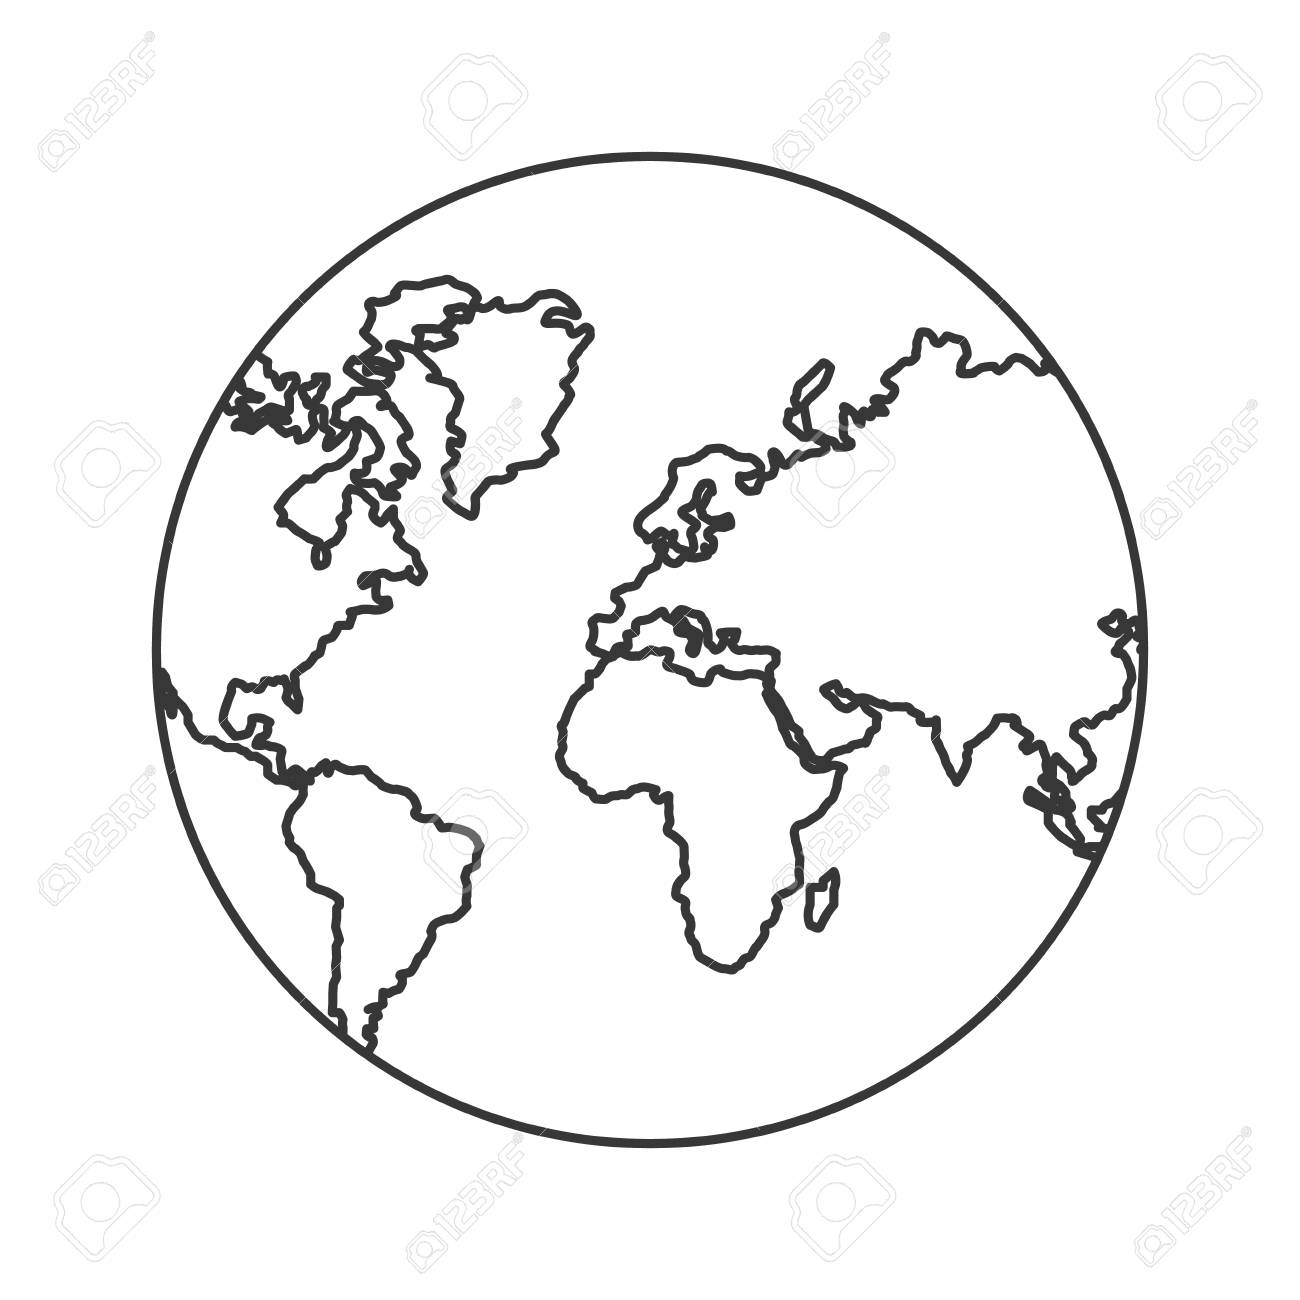 Globe map clipart.